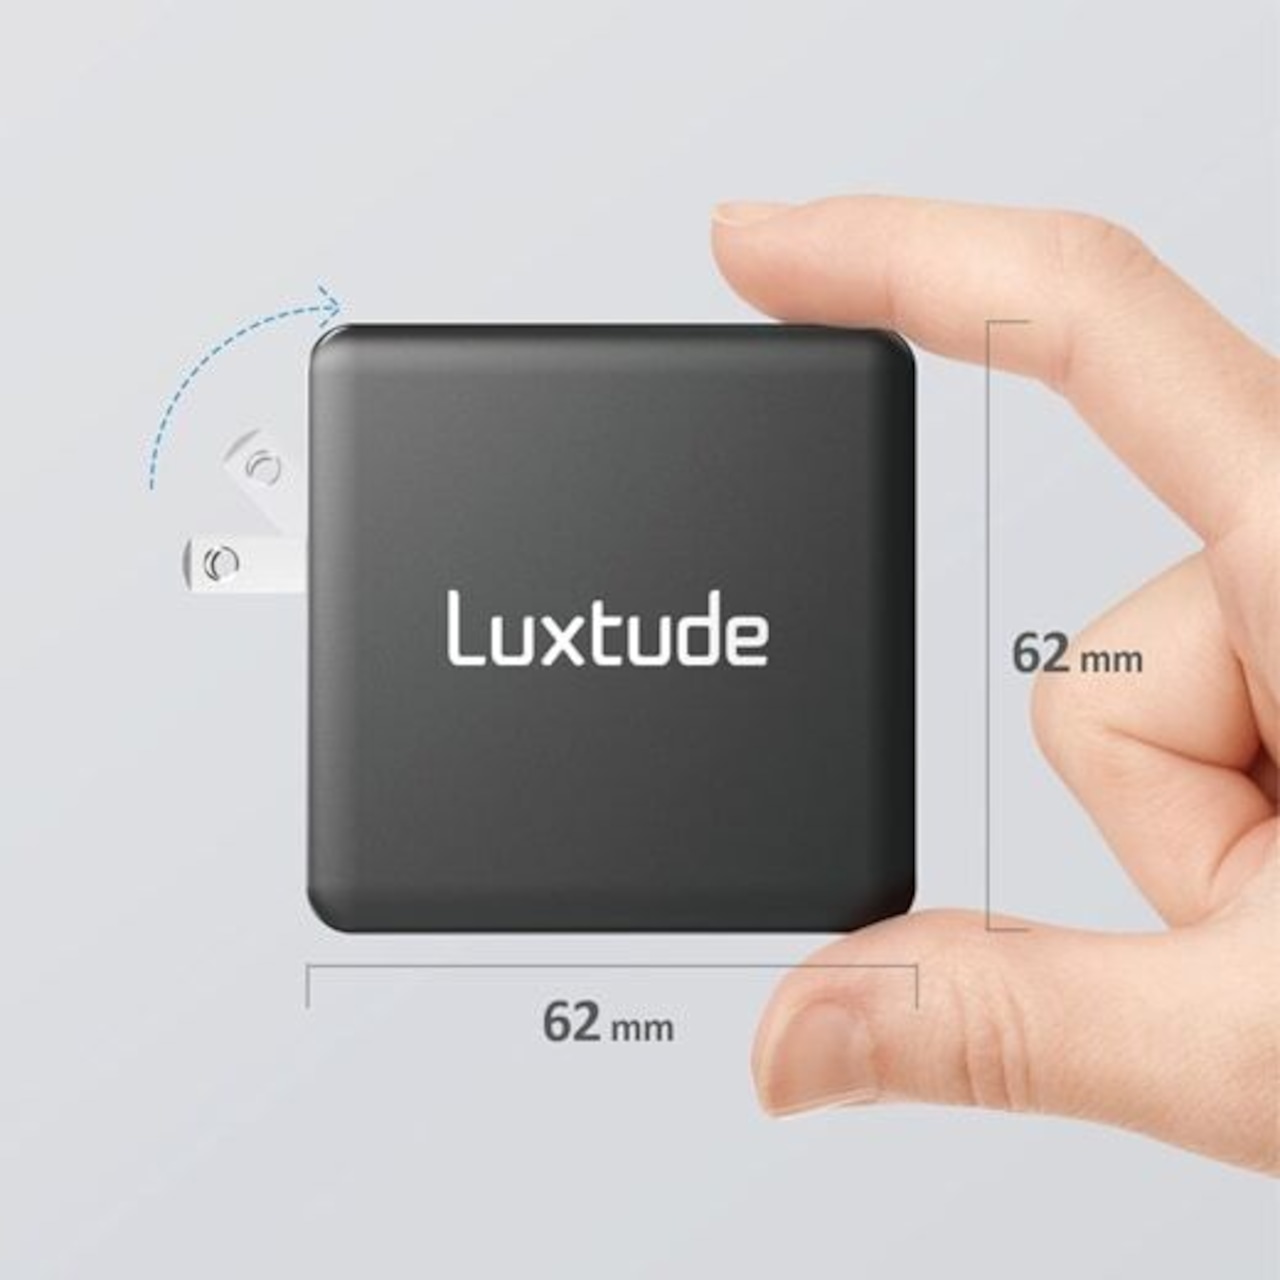 Luxtude（ラックスチュード） モバイルバッテリー 充電器アダプタ S-TR-140